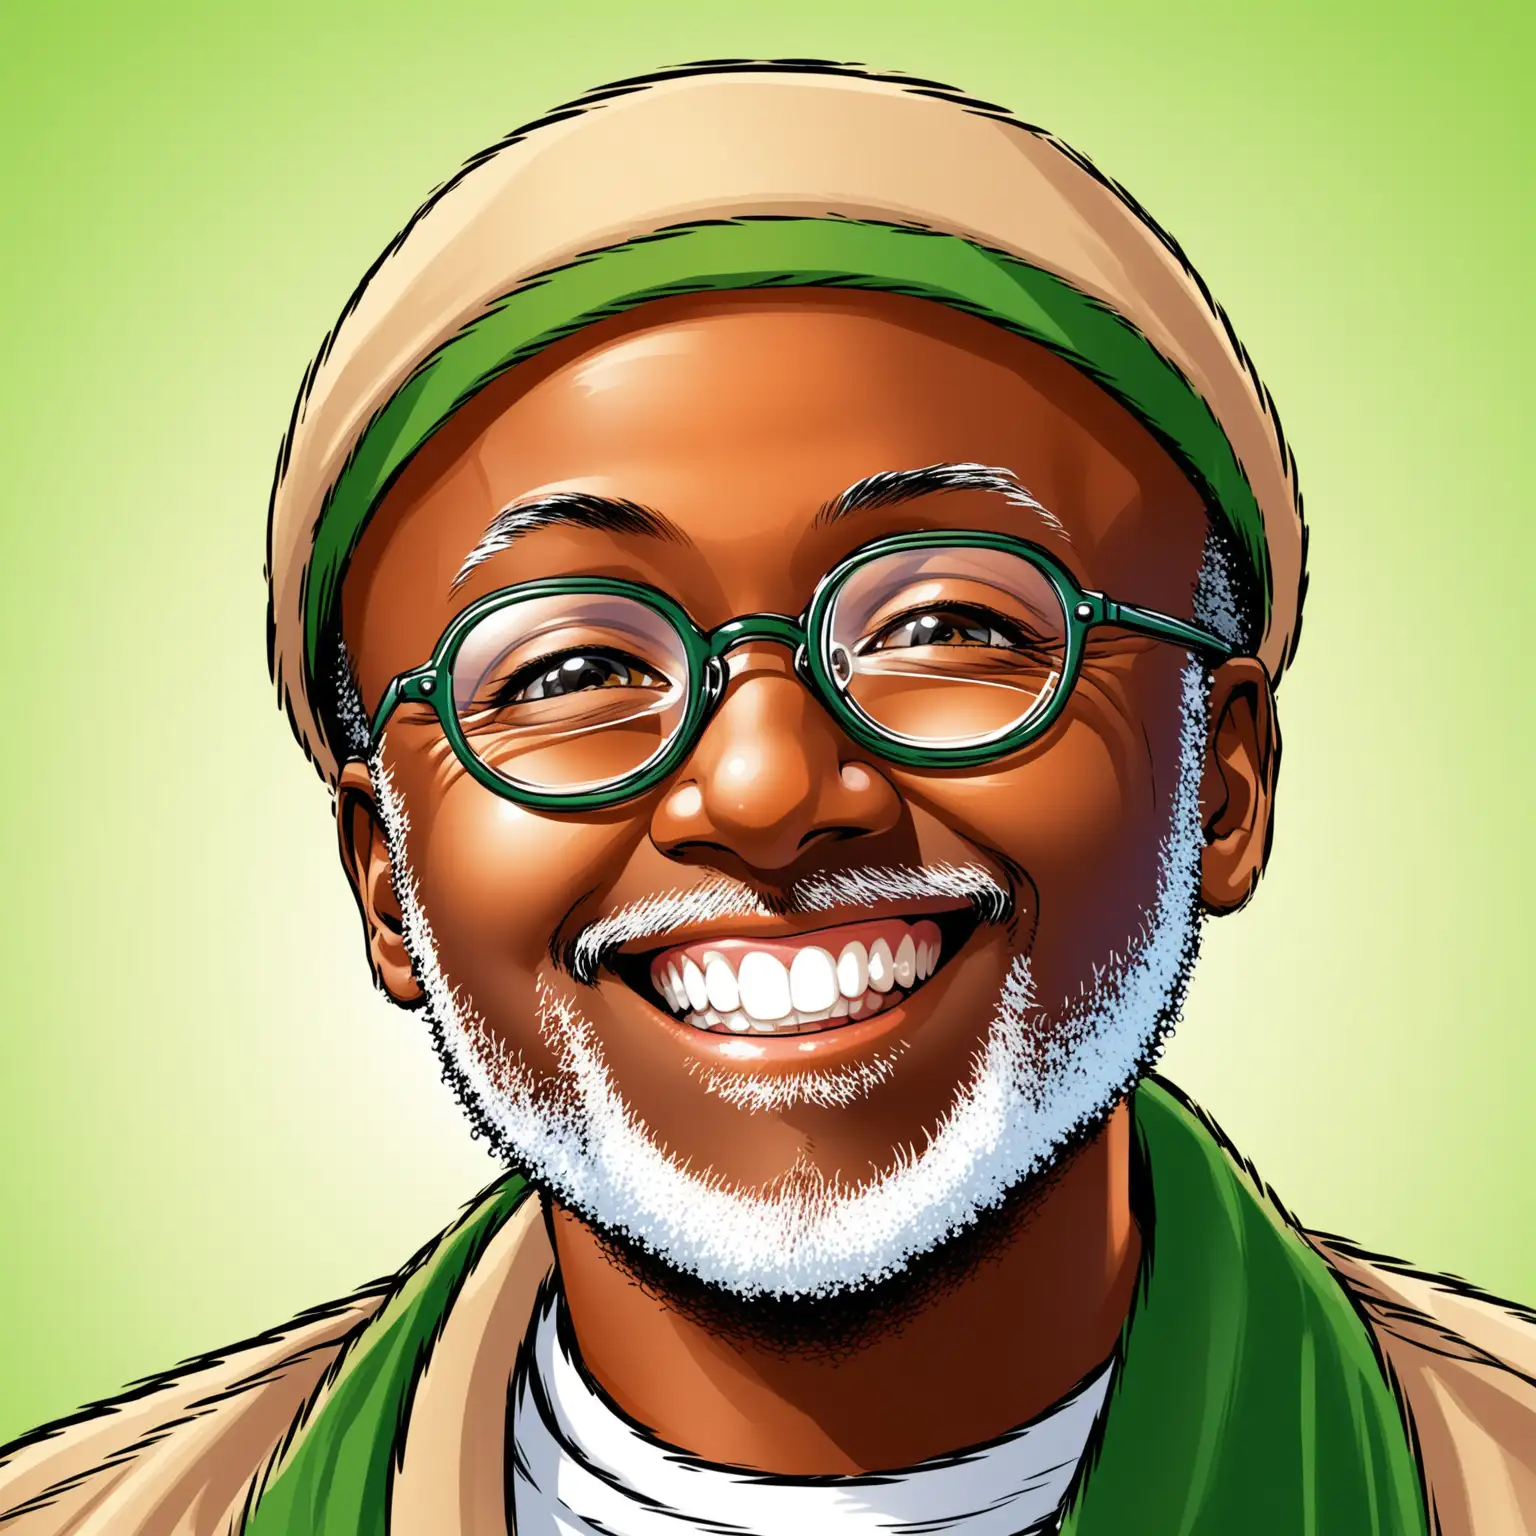 Illustrate an image of Amílcar Cabral, smiling. Cartoon effect.